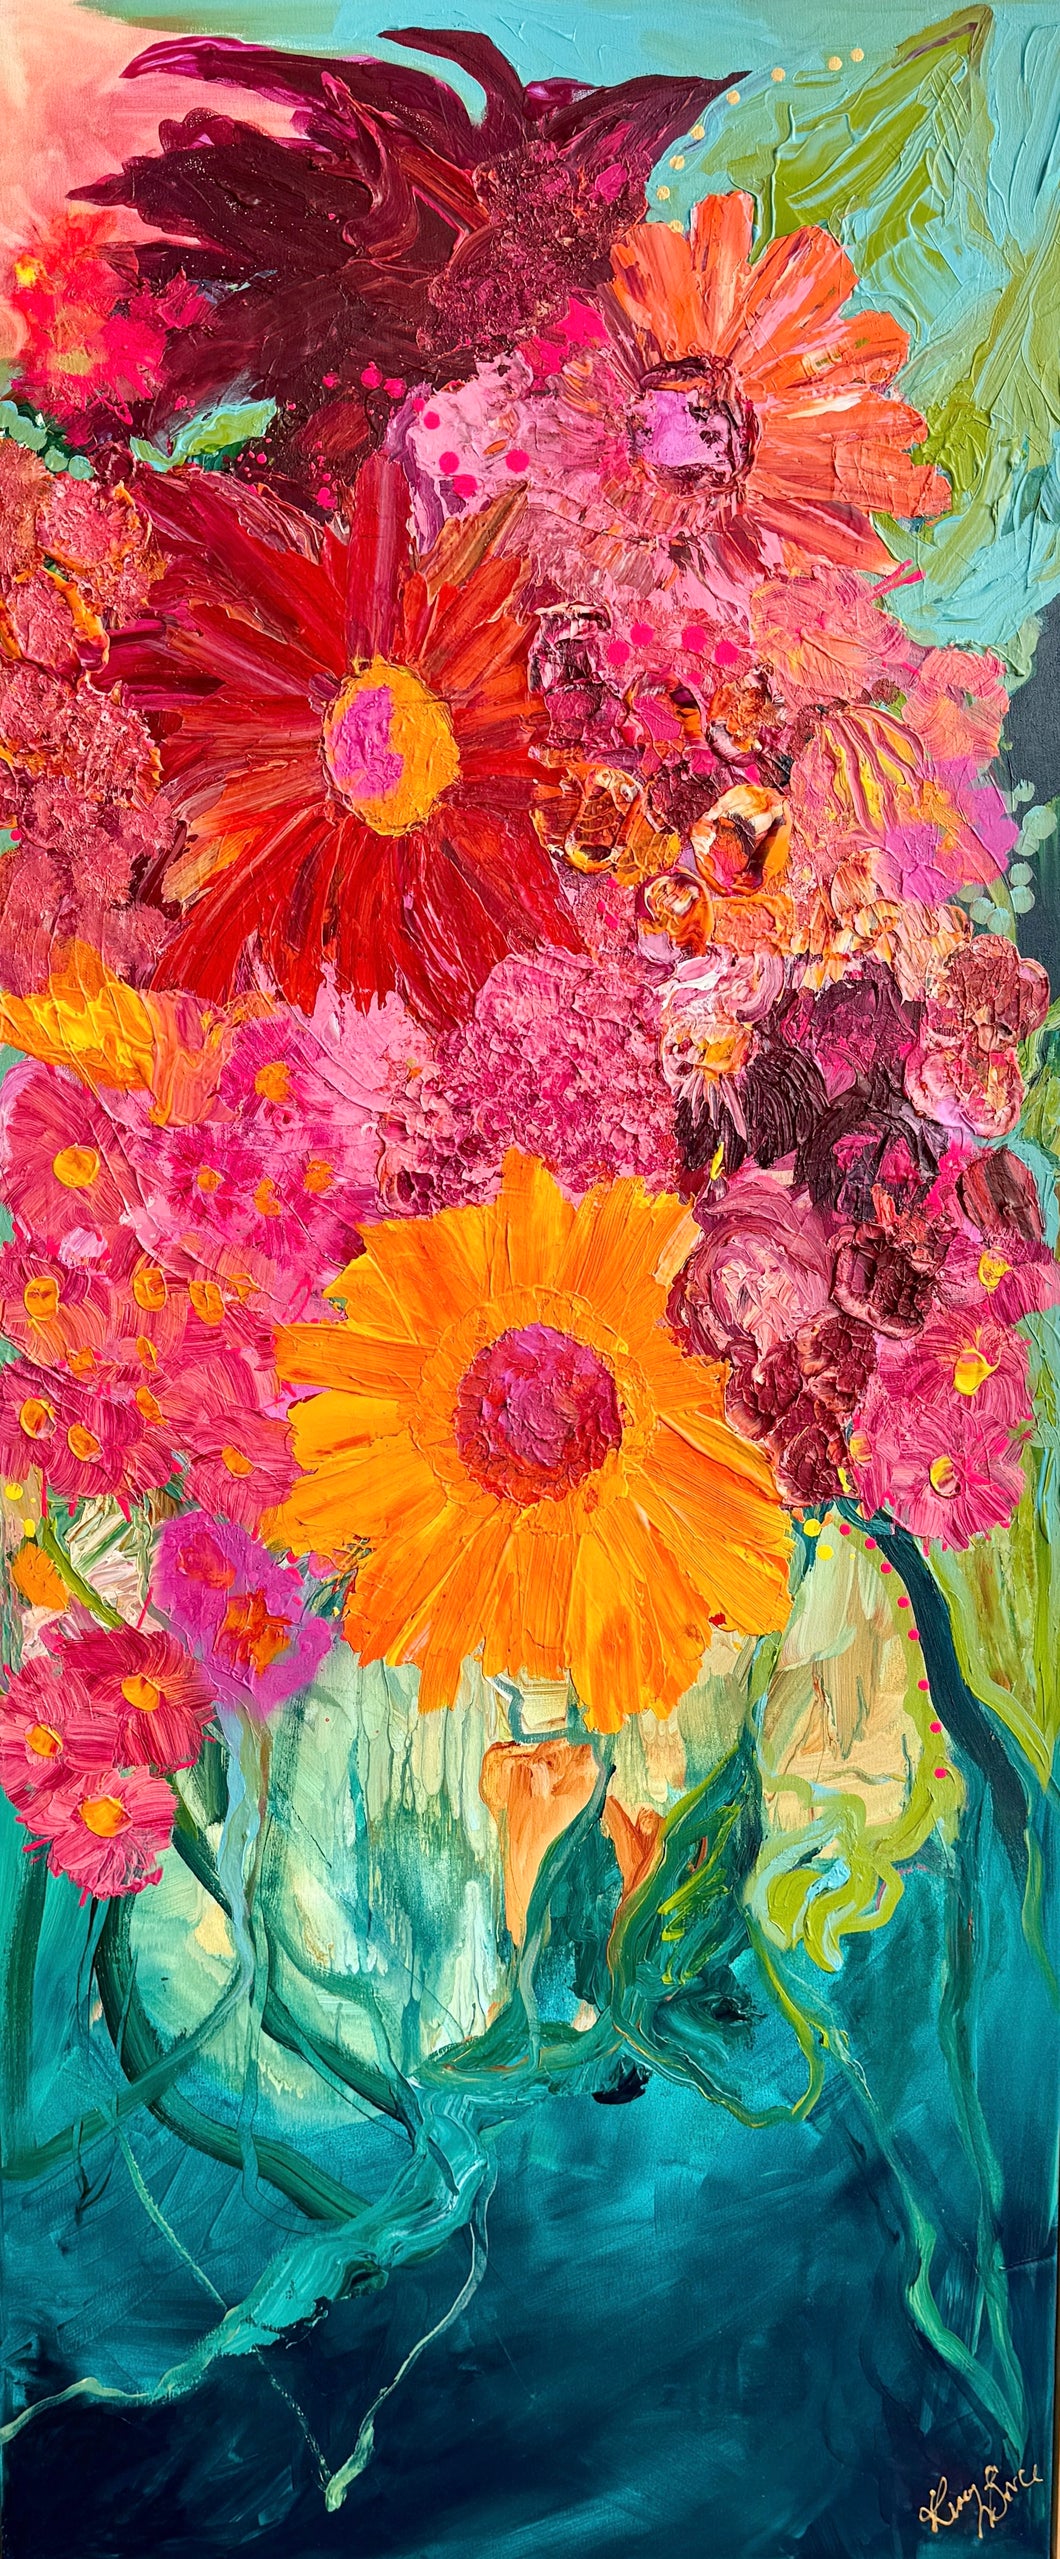 Kerry Bruce, Flower Power, Acrylic on Canvas